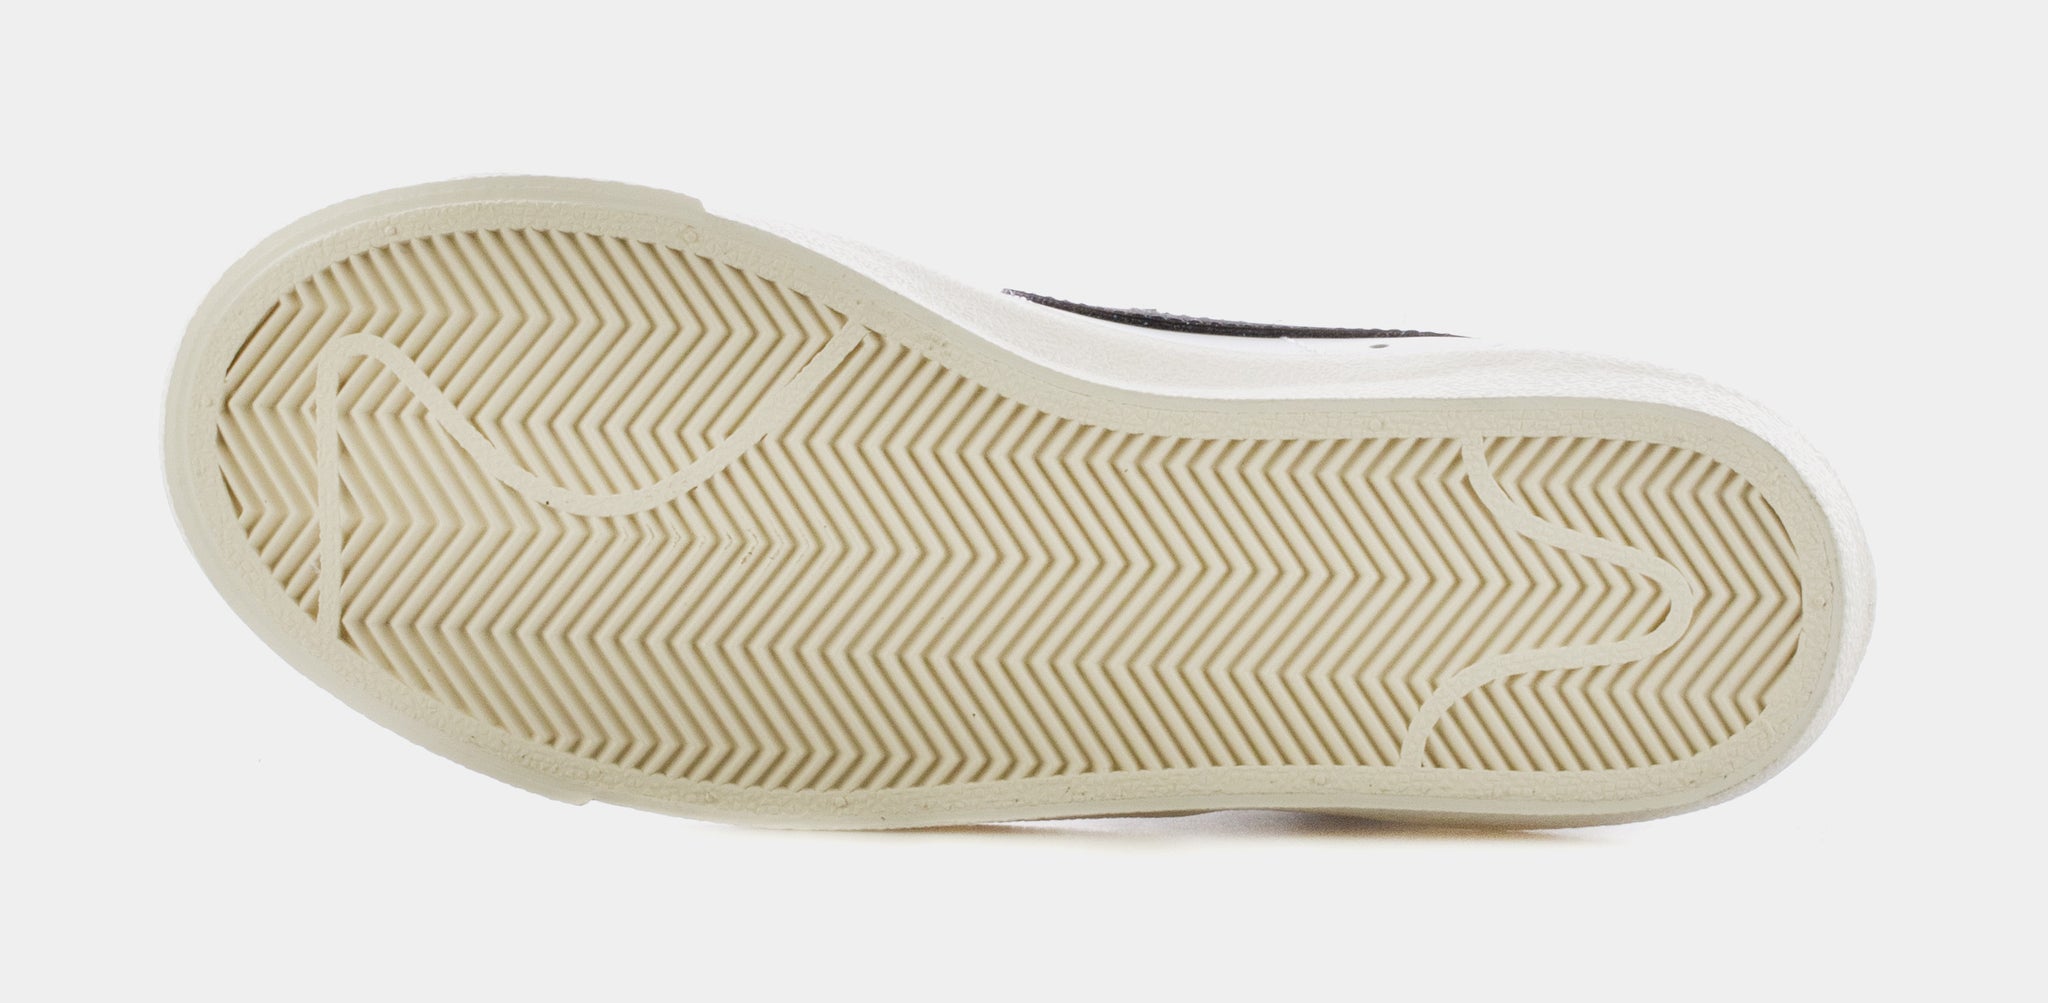 Nike Blazer Mid 77 Womens Lifestyle Shoe - White/Black